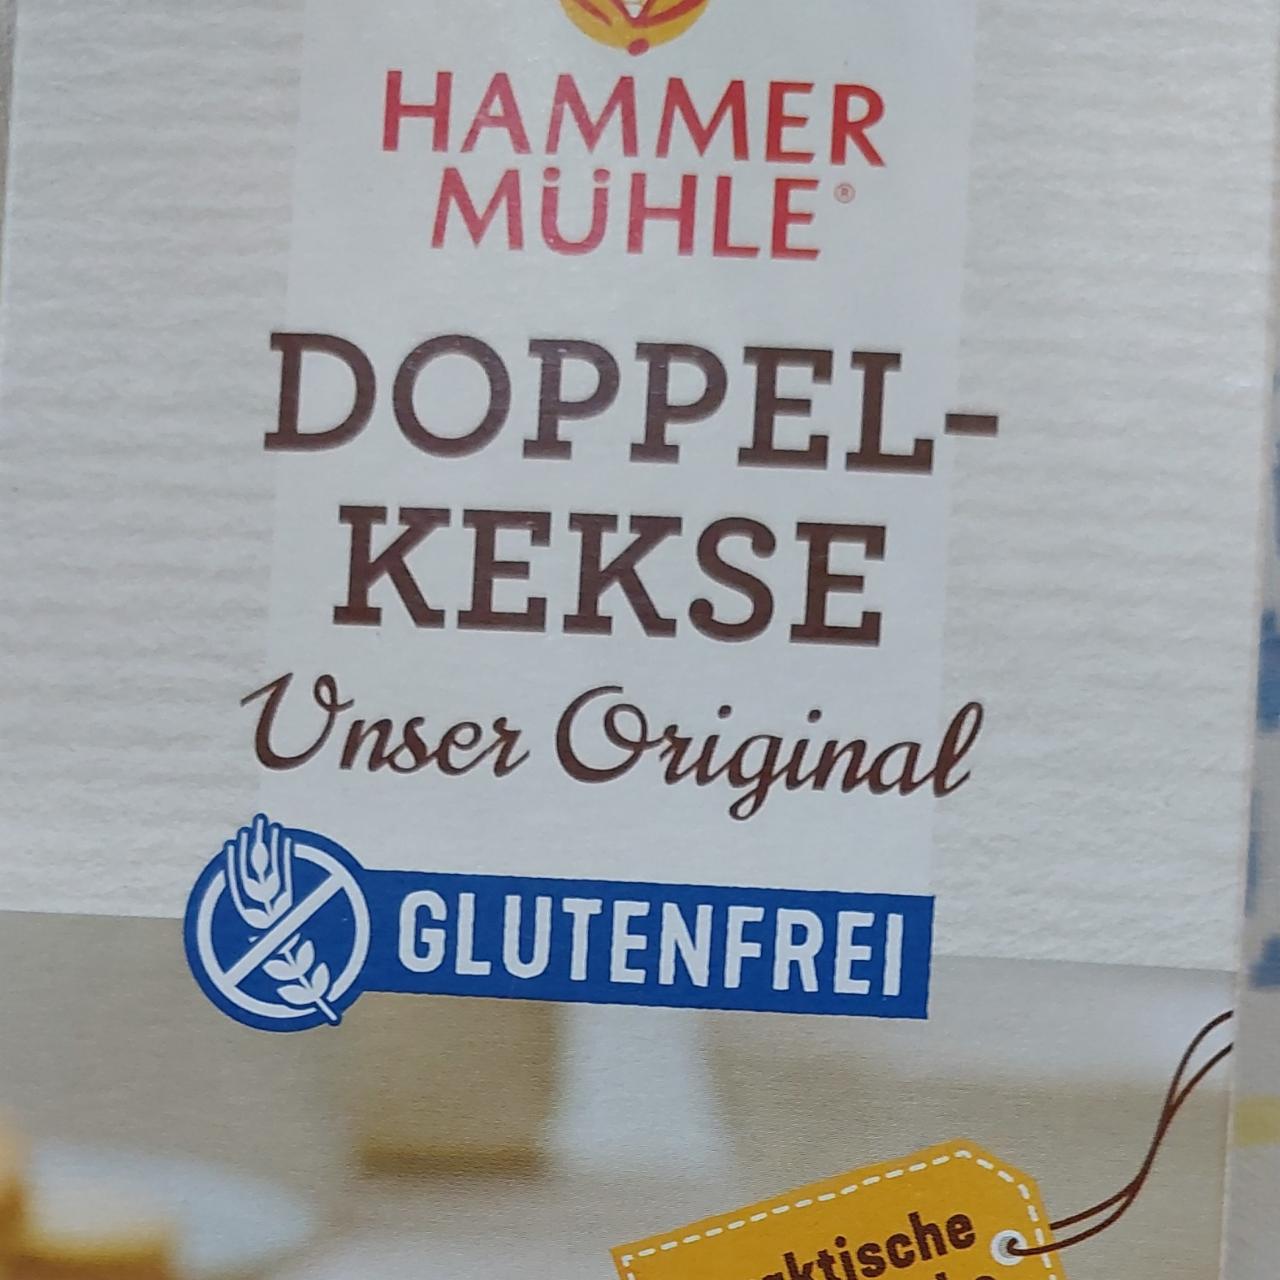 Fotografie - Doppelkekse glutenfrei Hammer Mühle